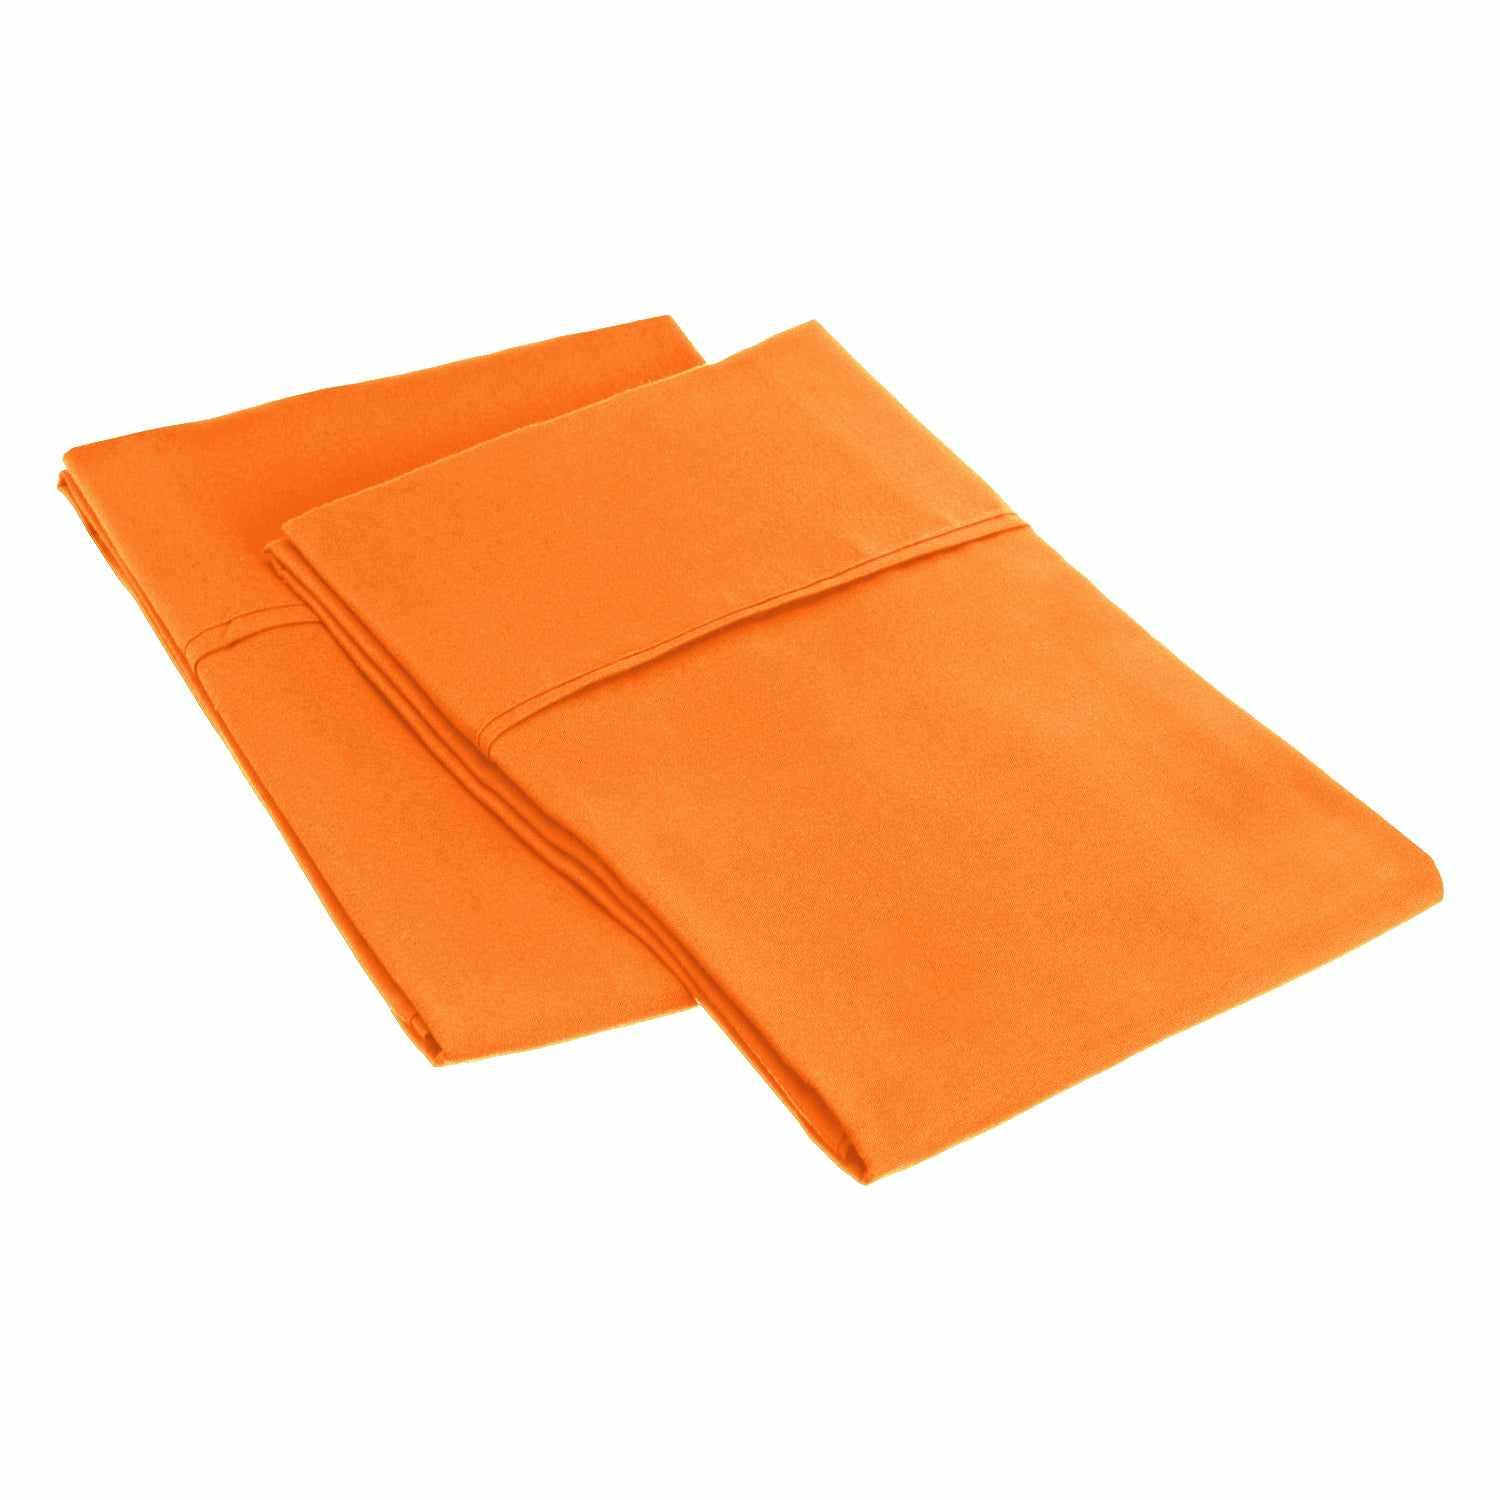 Superior 2 Piece Microfiber Wrinkle Resistant Solid Pillowcase Set - Orange